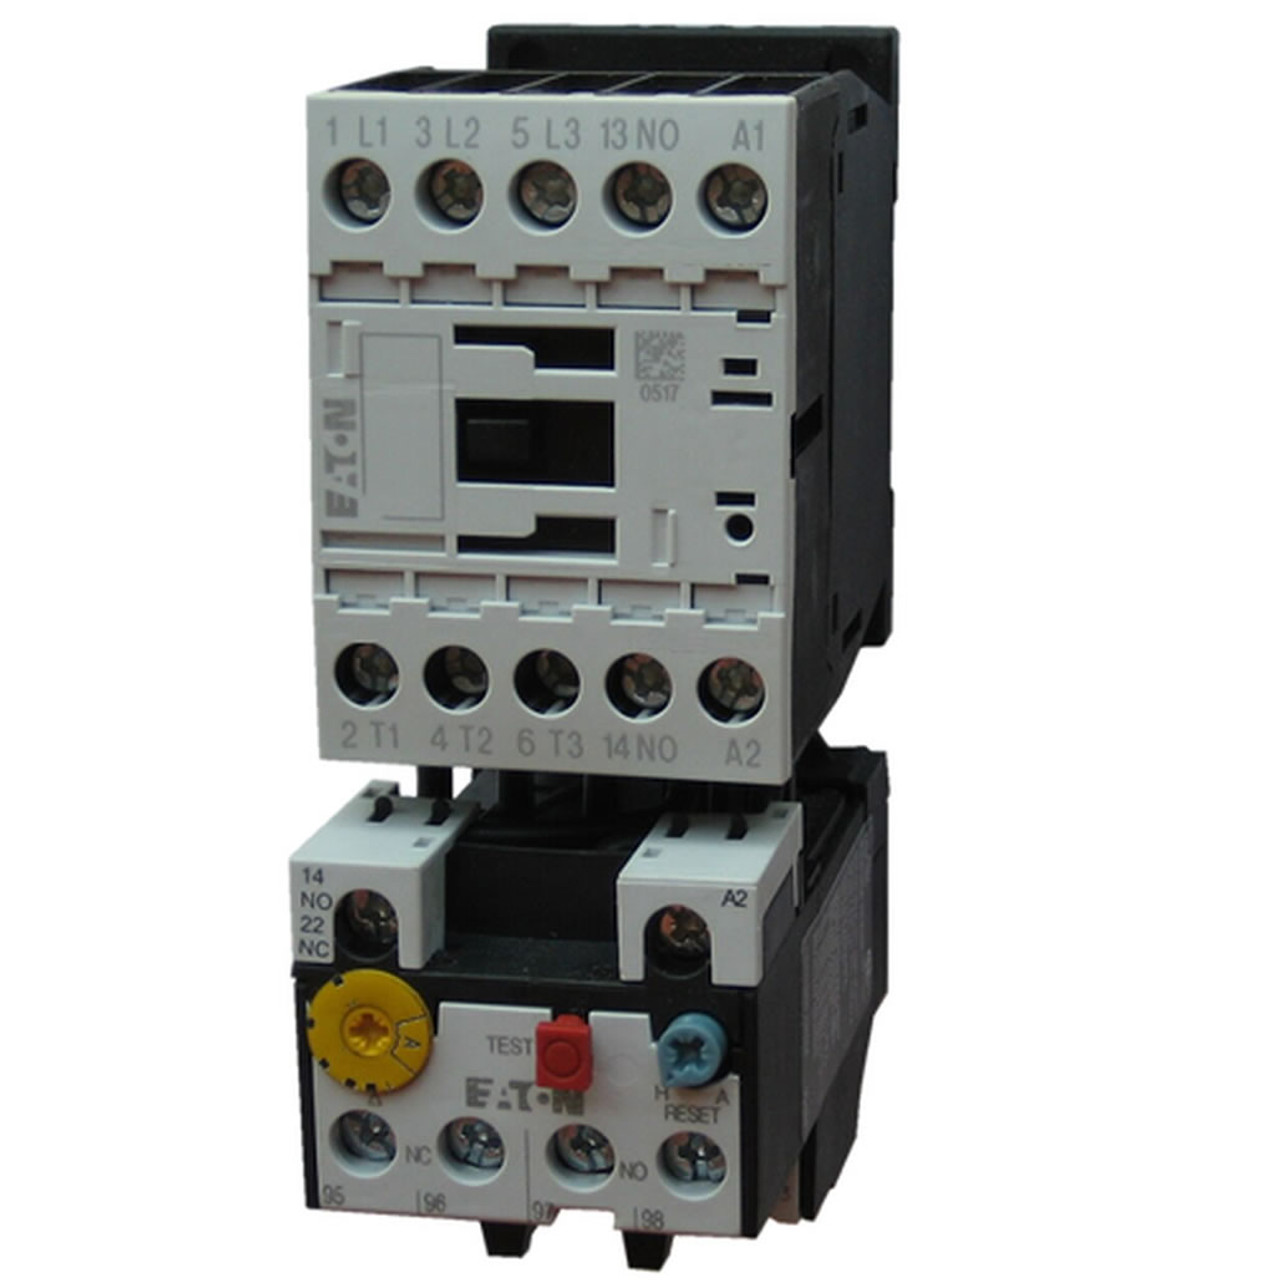 Eaton XTAE007B01A010 full voltage starter